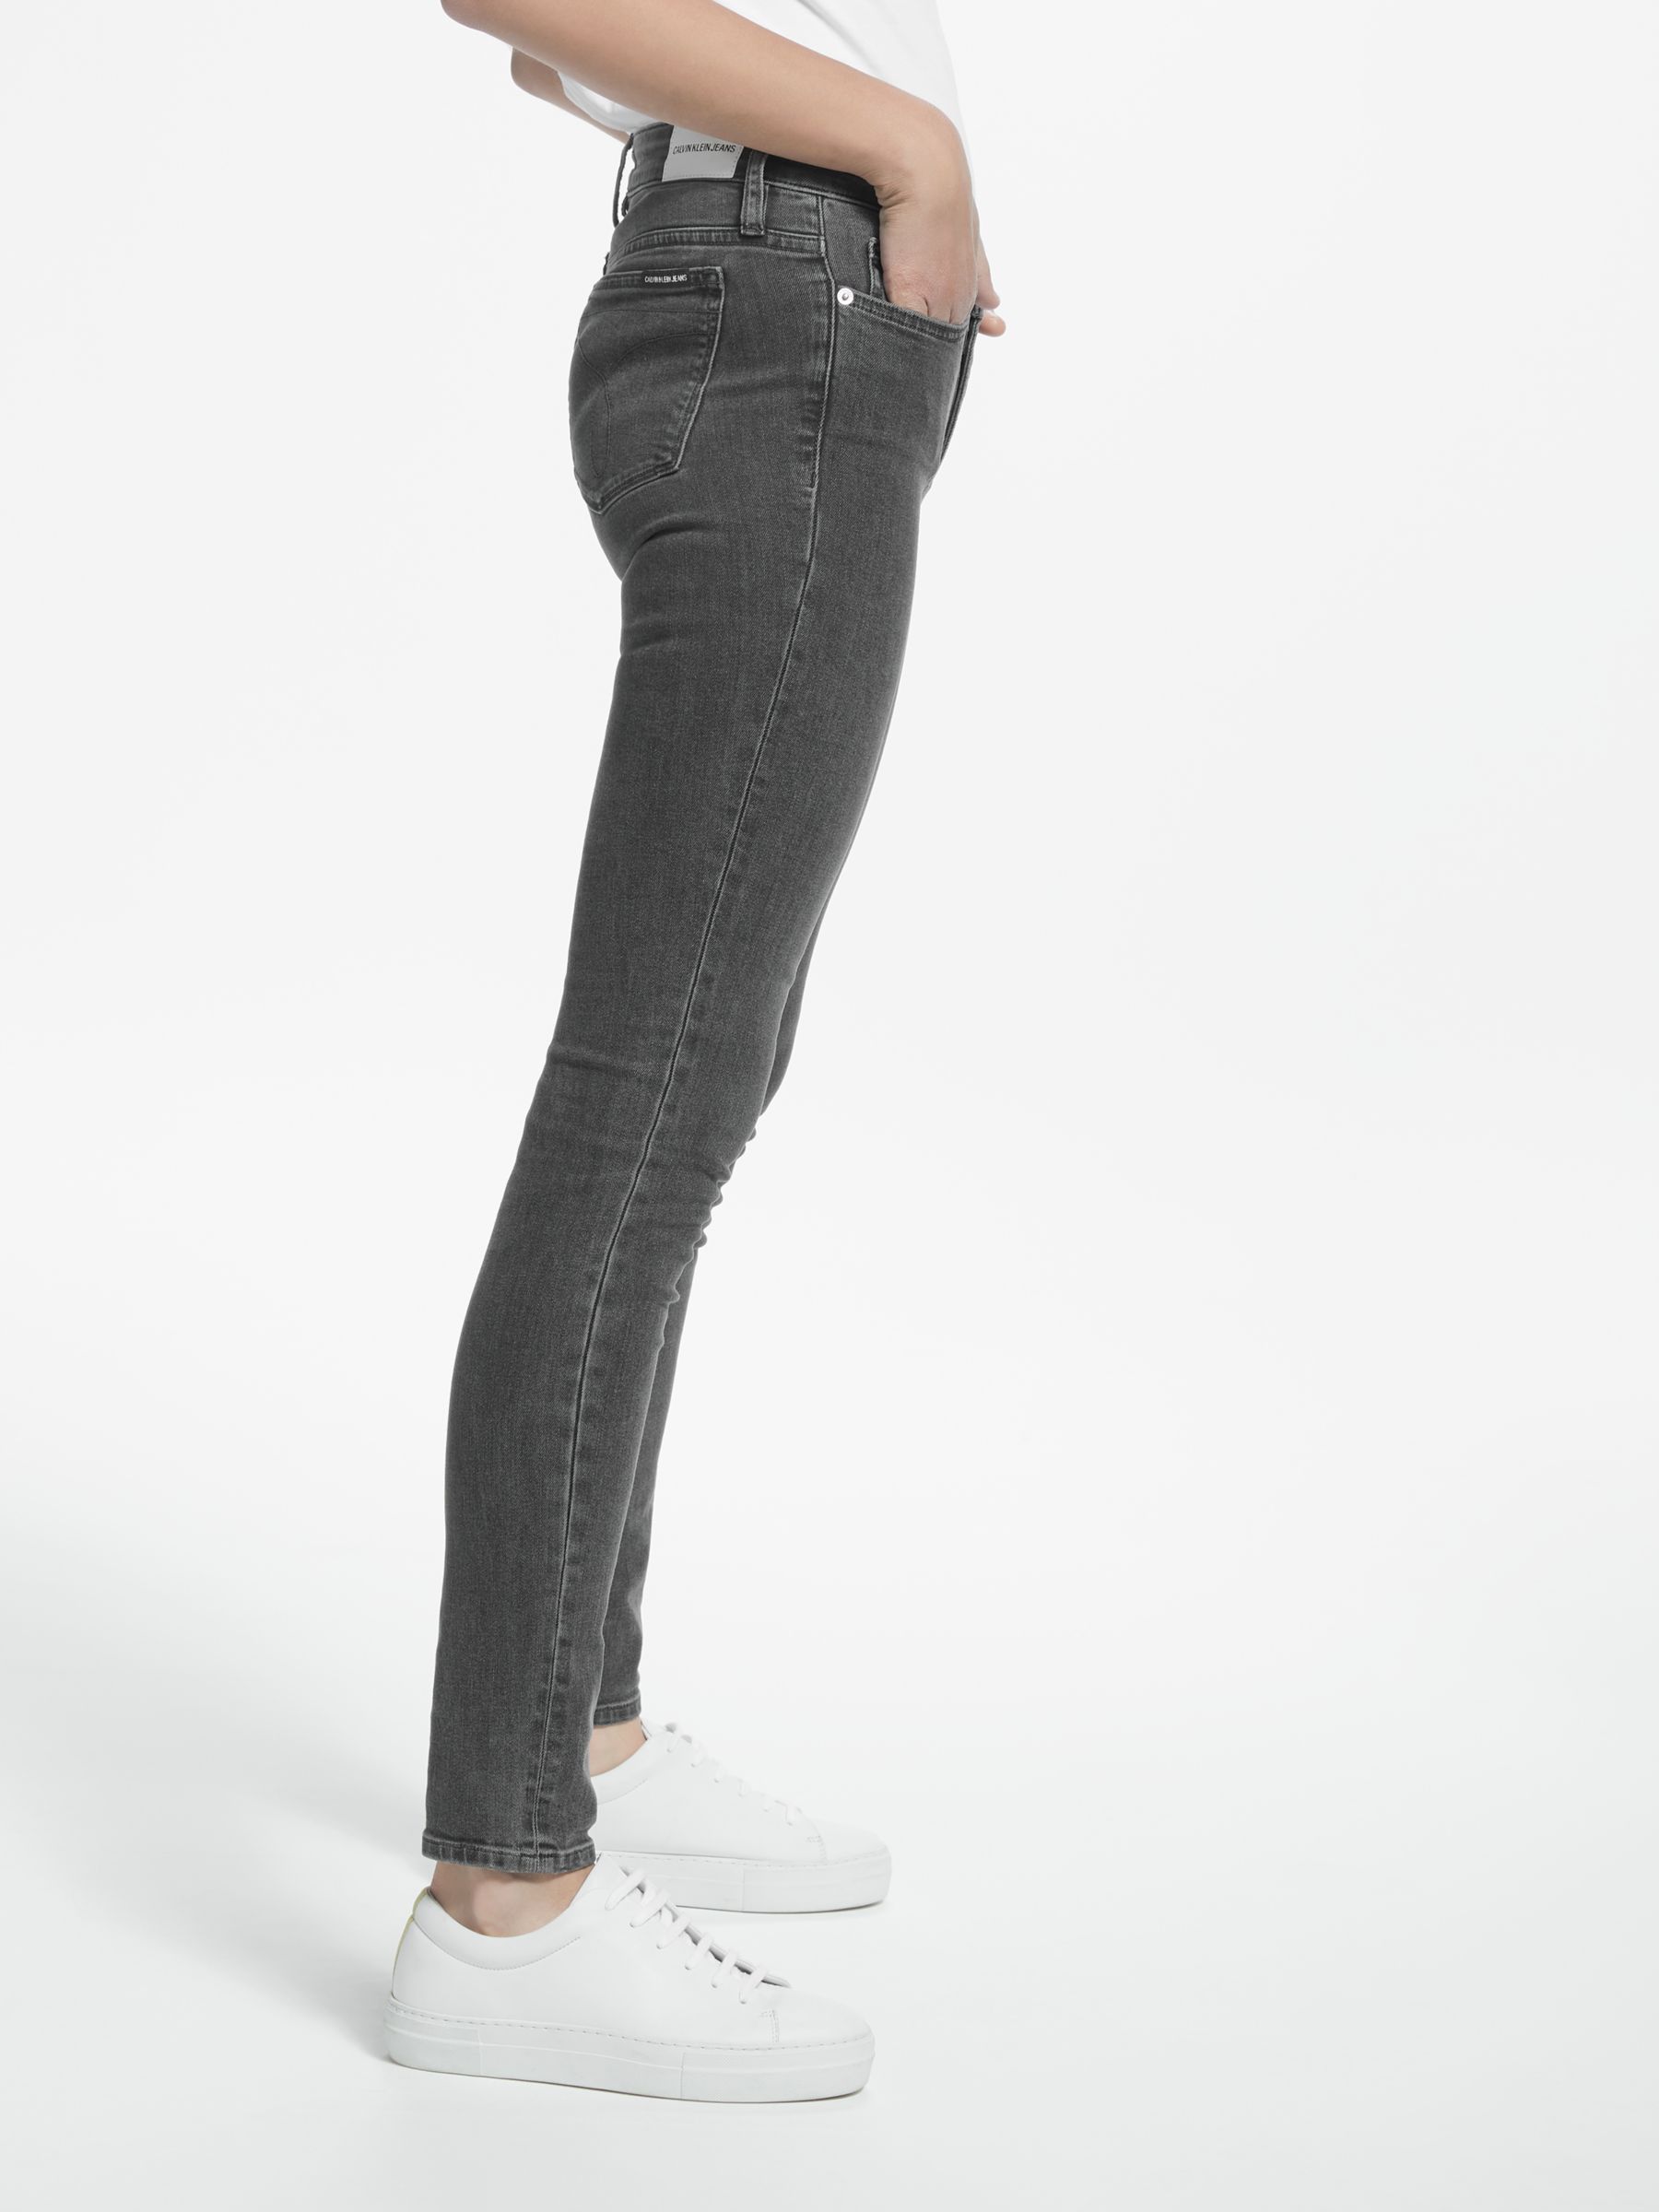 calvin klein skinny jeans mens